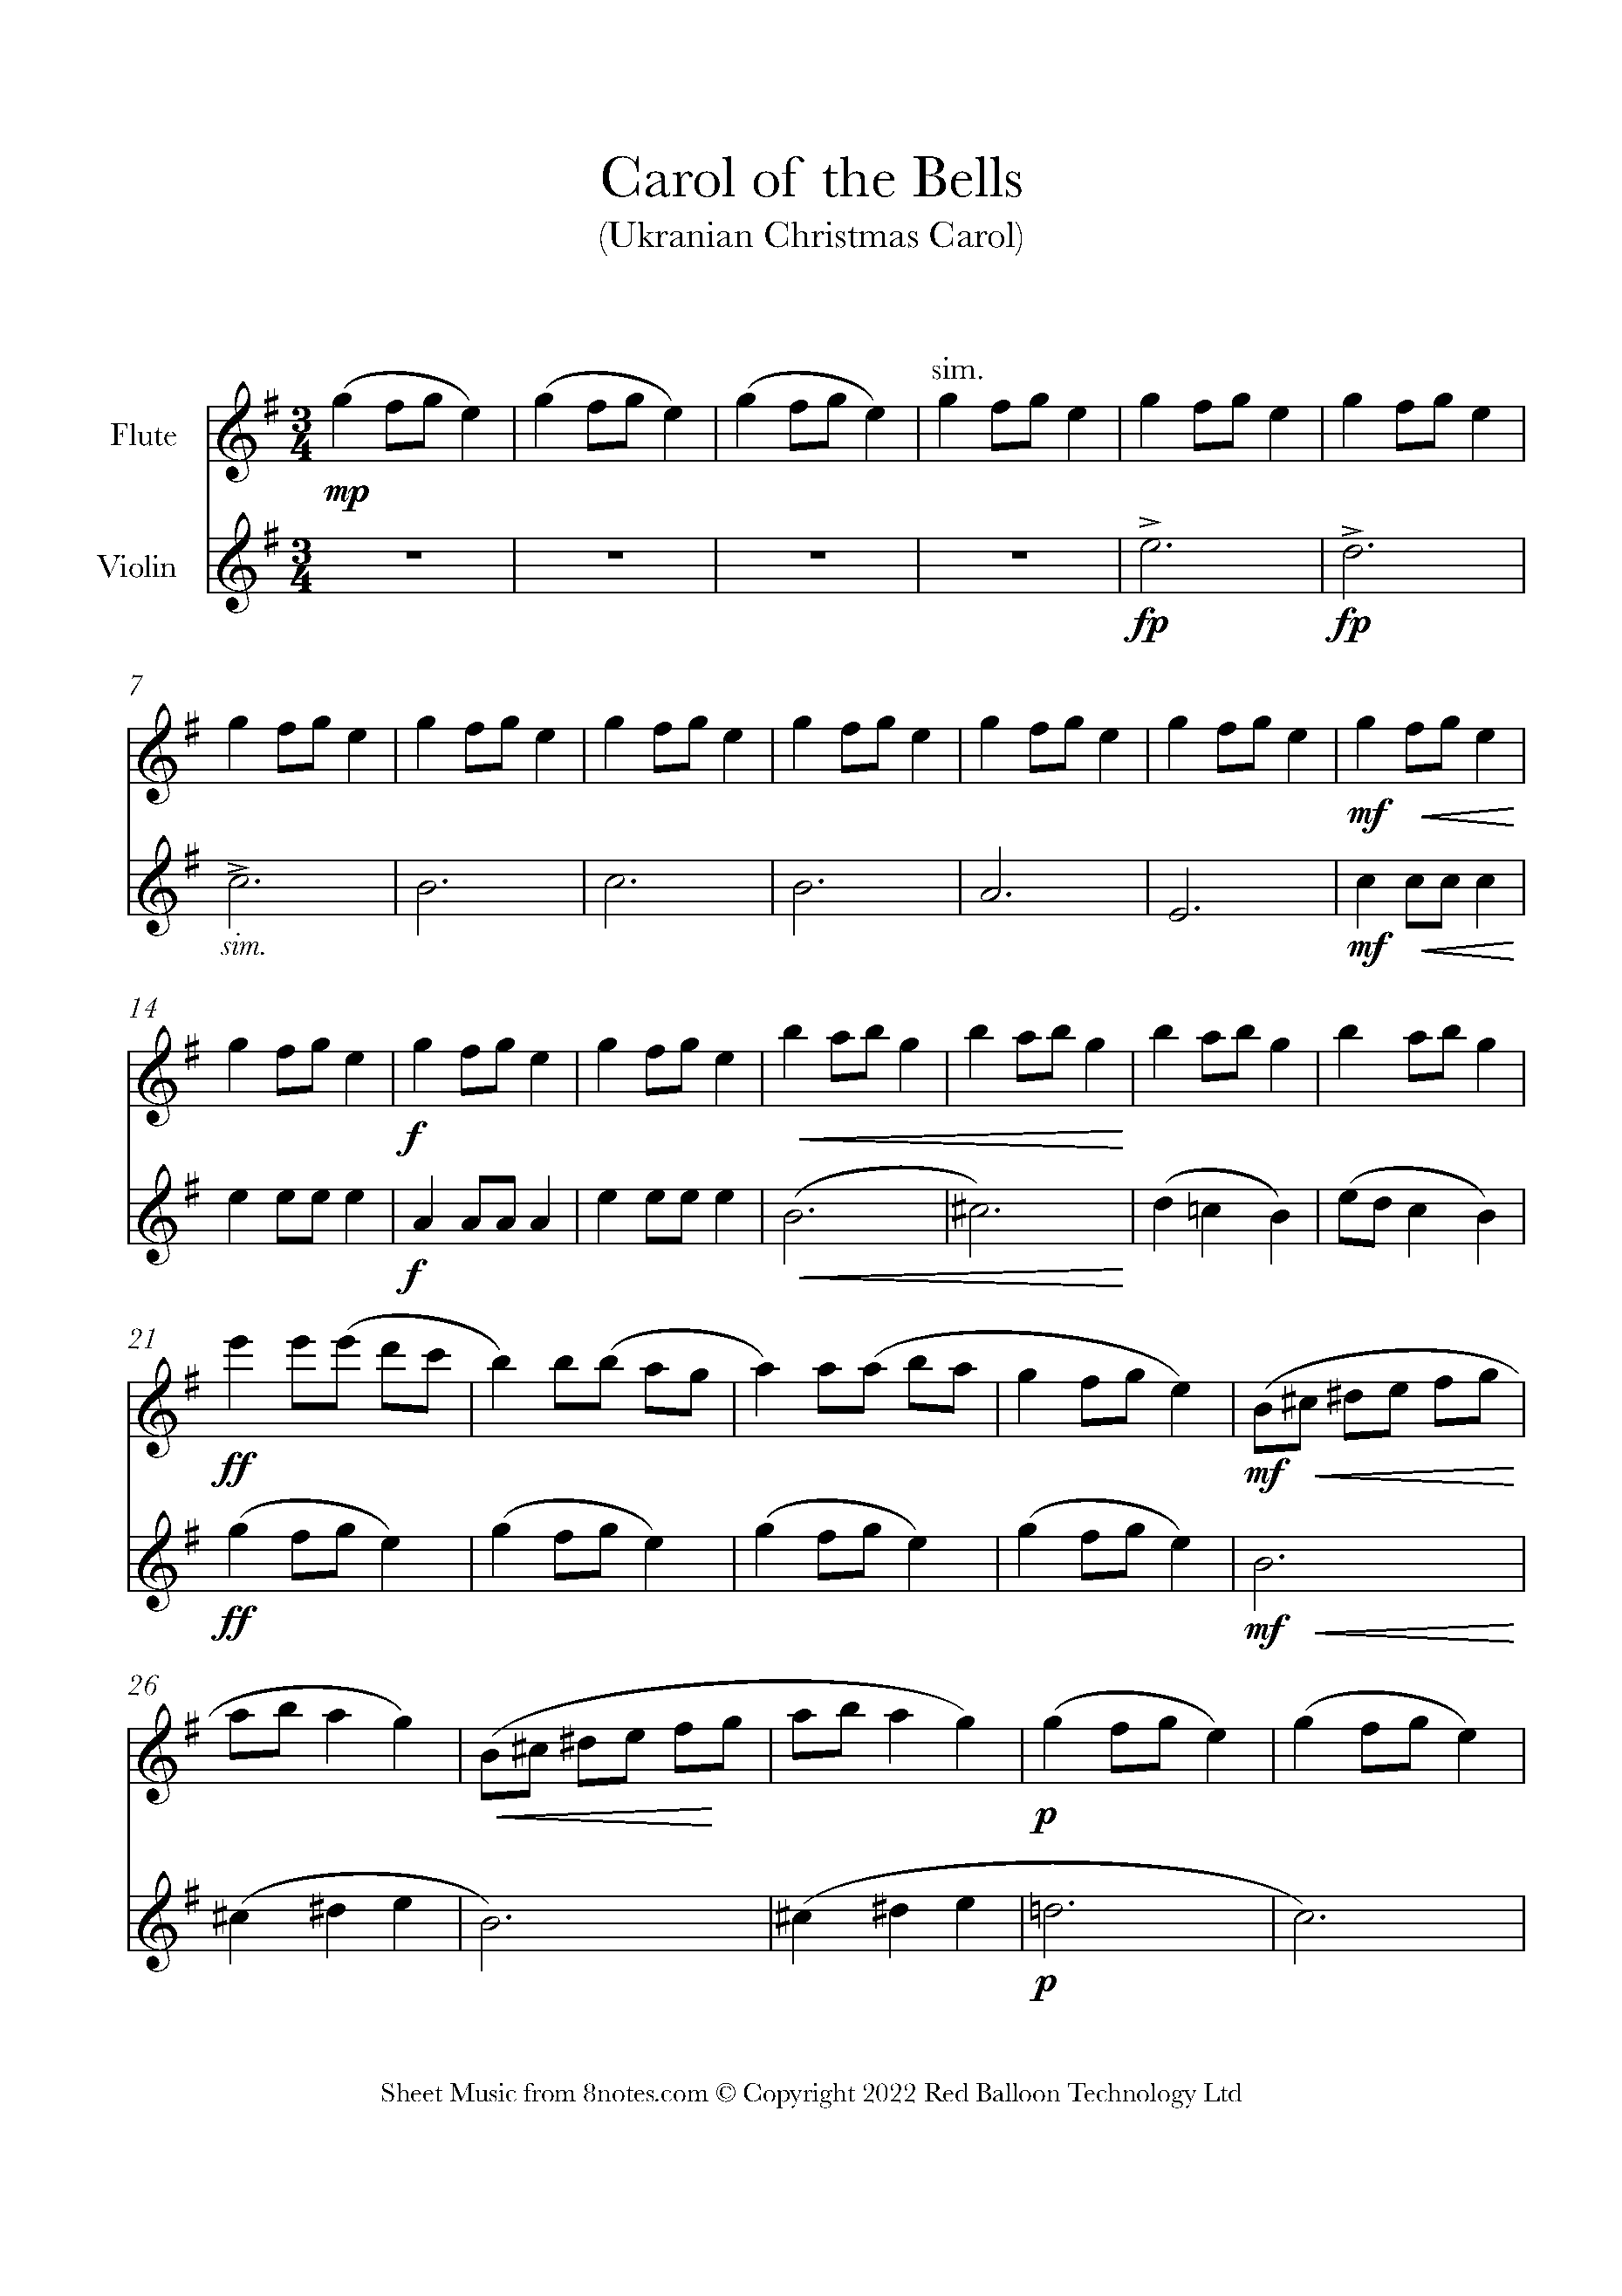 carol-of-the-bells-sheet-music-for-violin-flute-duet-8notes